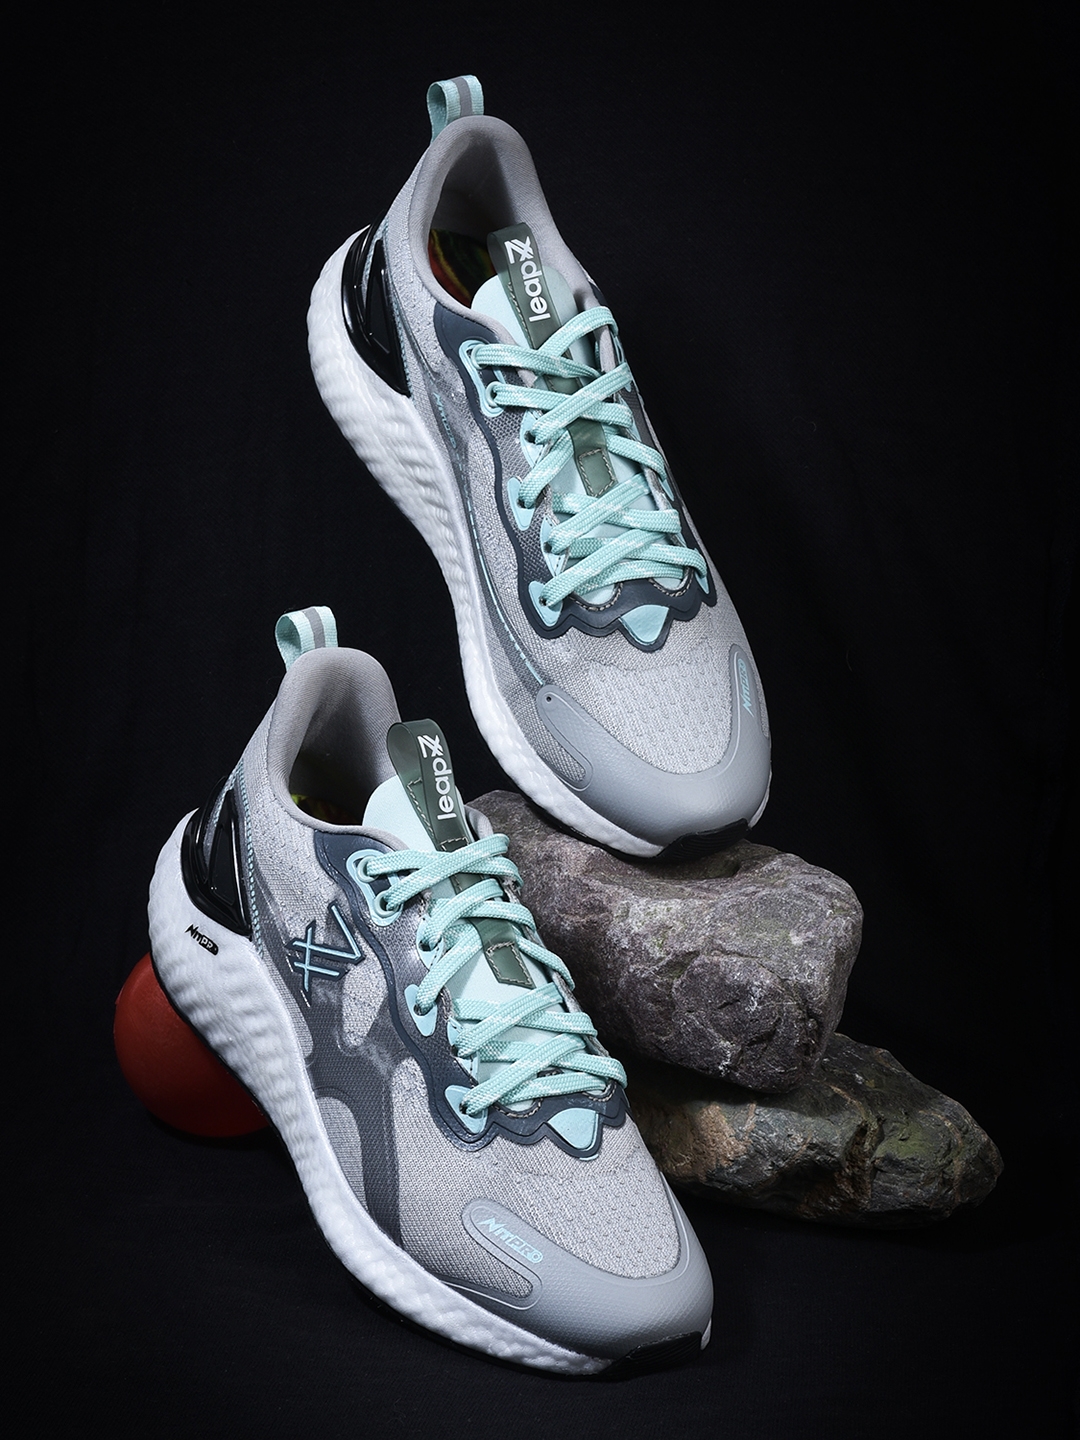 Liberty | Men'S Leap7X Grey Running Shoes